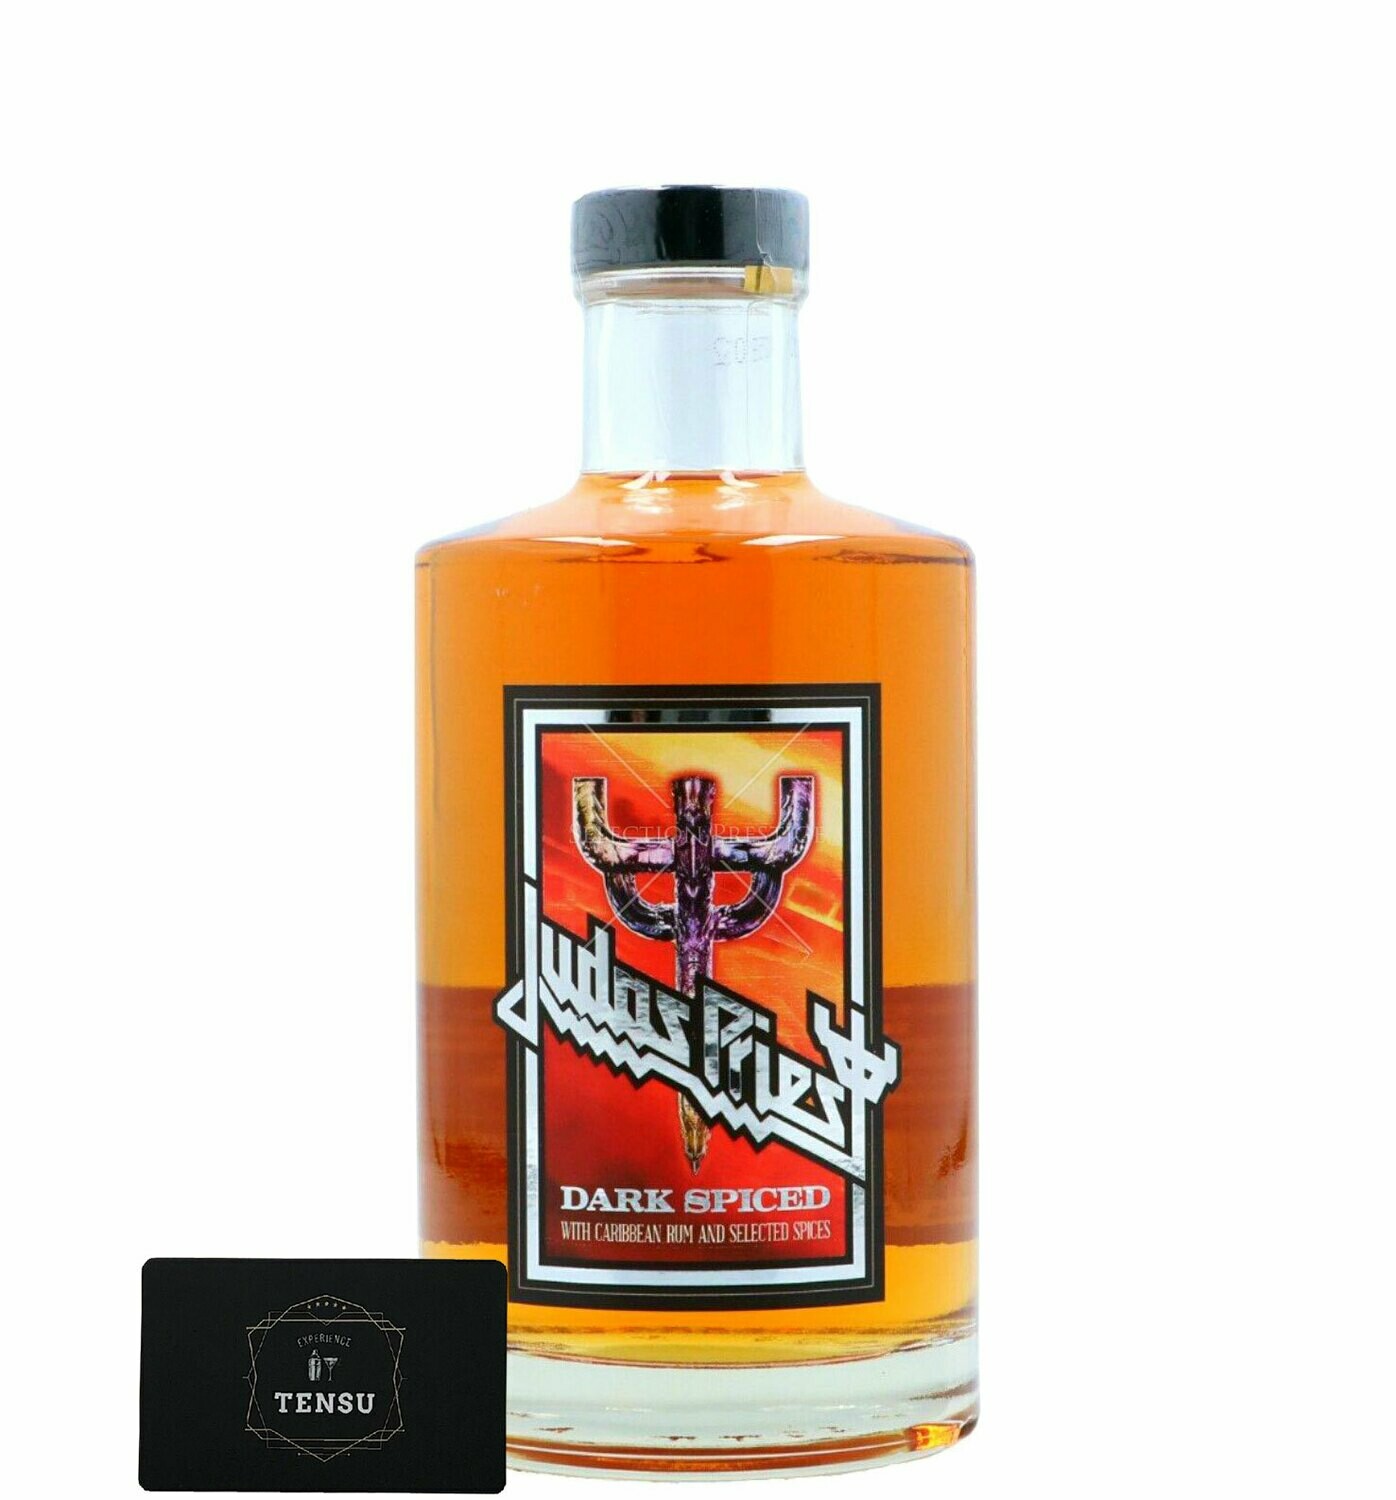 Judas Priest Dark Spiced Firepower Rum 37.5 "IB"